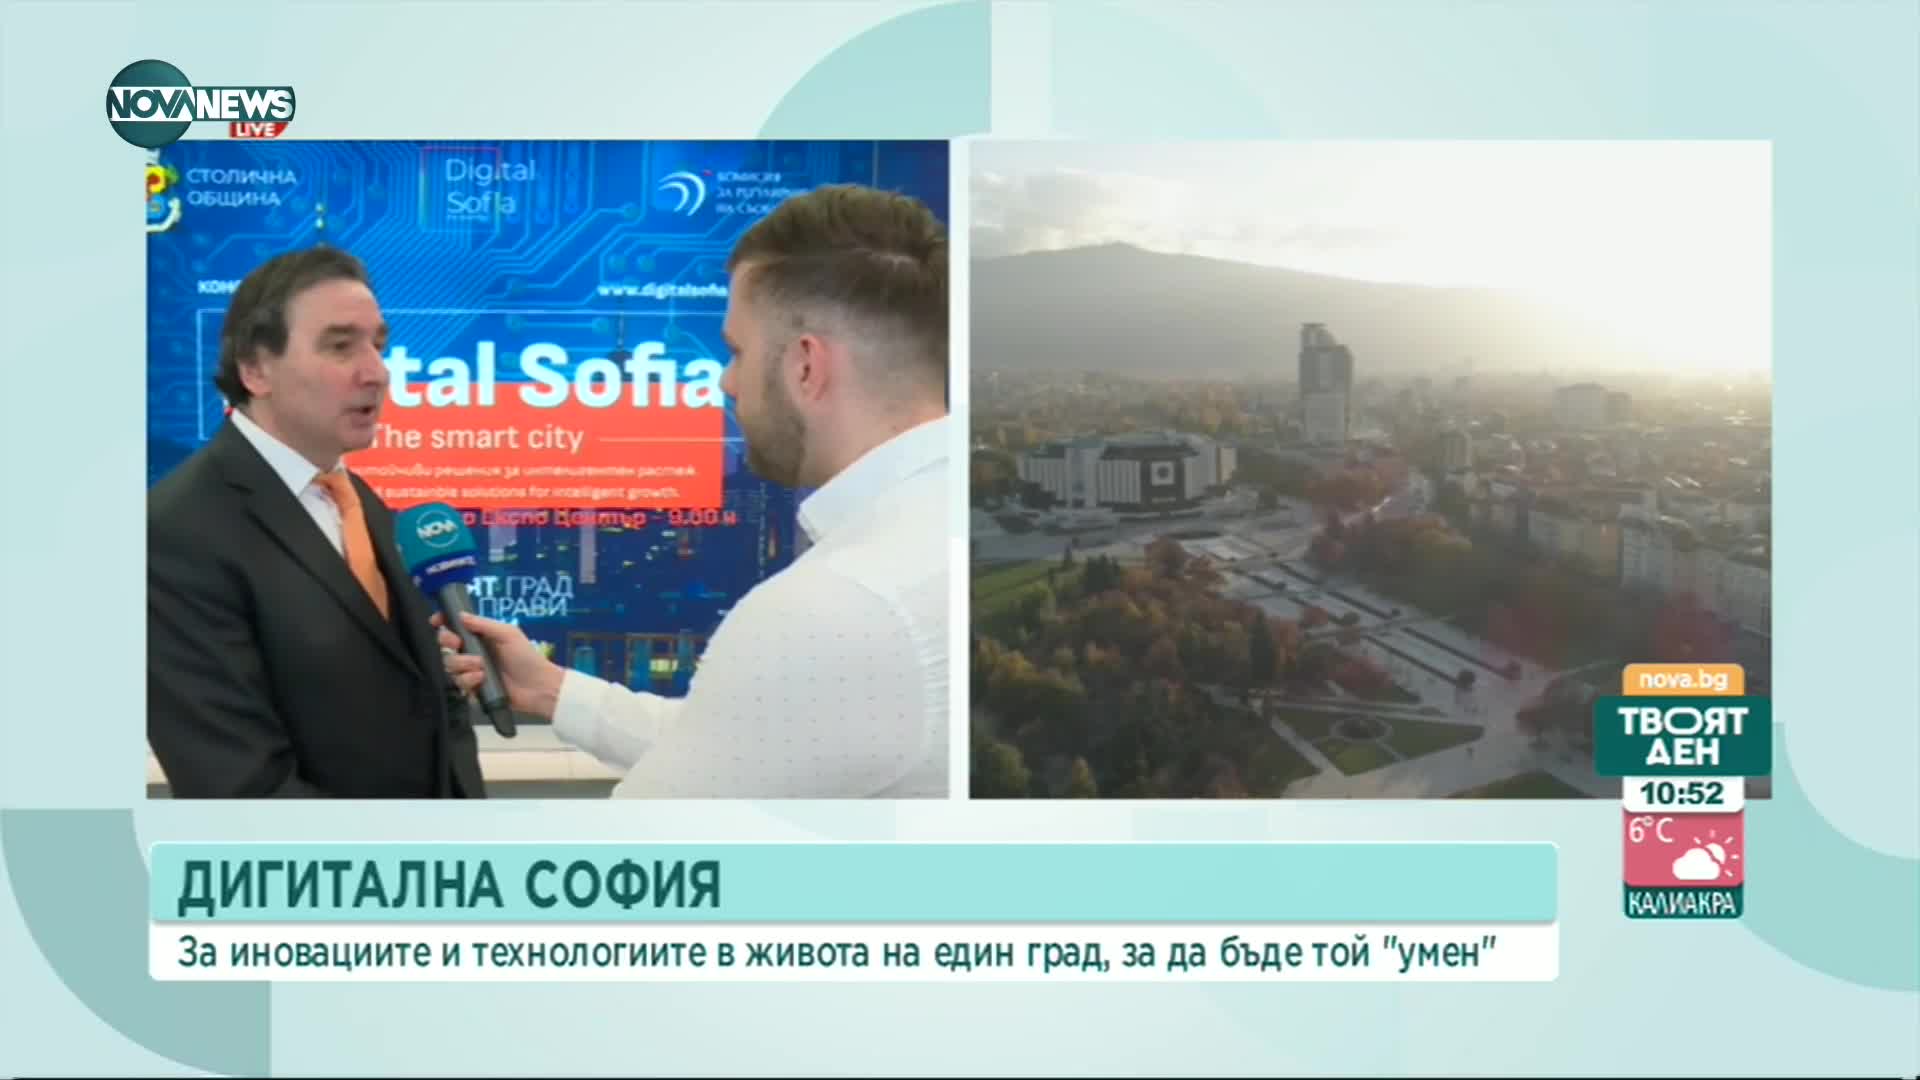 Инициативата "Дигитална София" прави столицата "умен" град